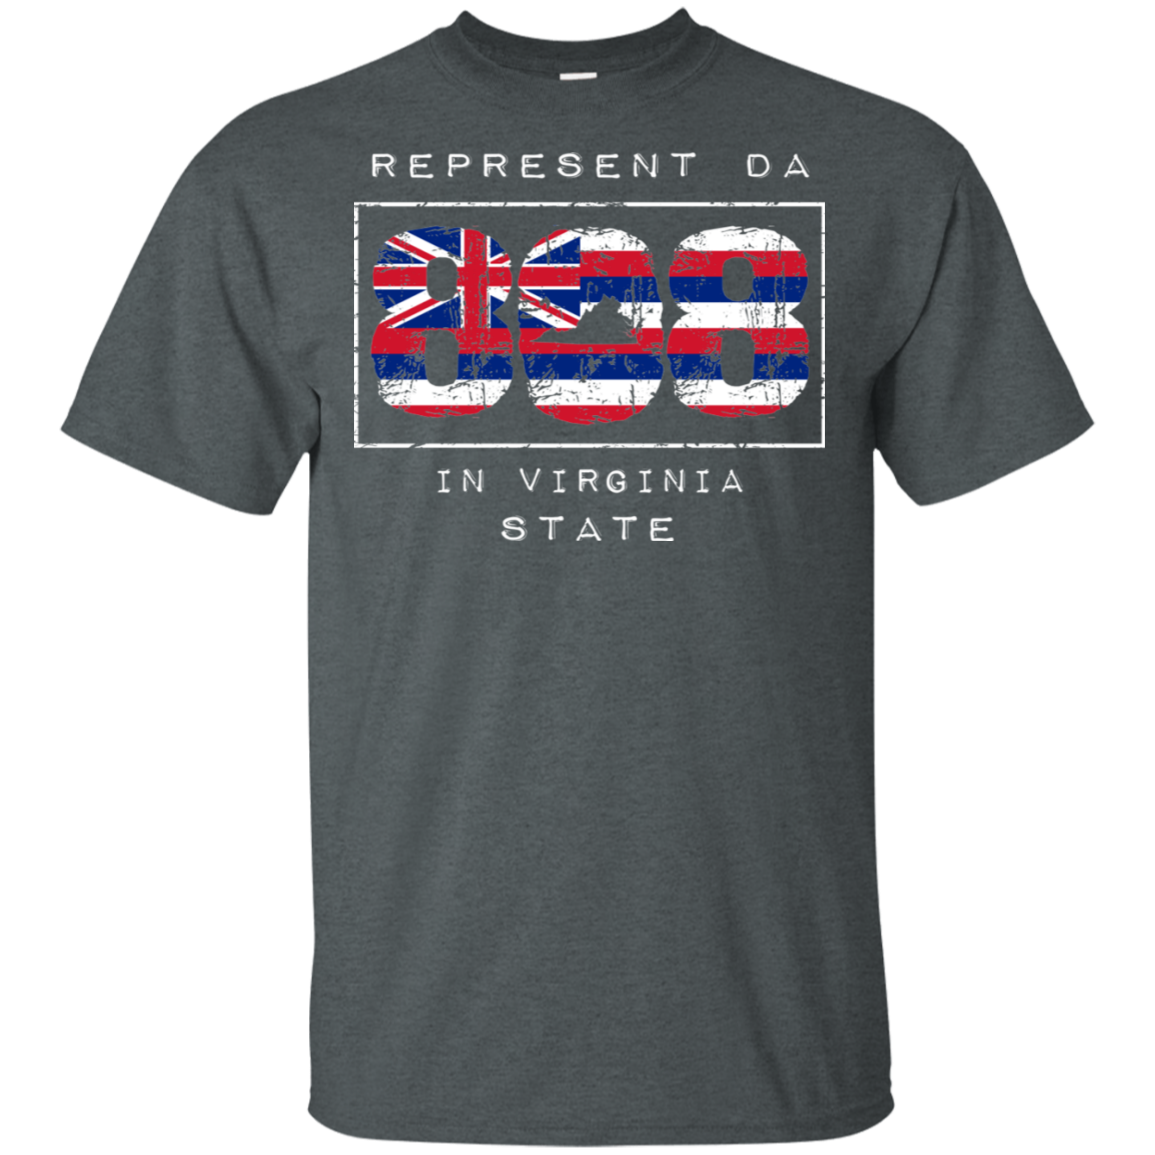 Rep Da 808 In Virginia State Ultra Cotton T-Shirt, T-Shirts, Hawaii Nei All Day